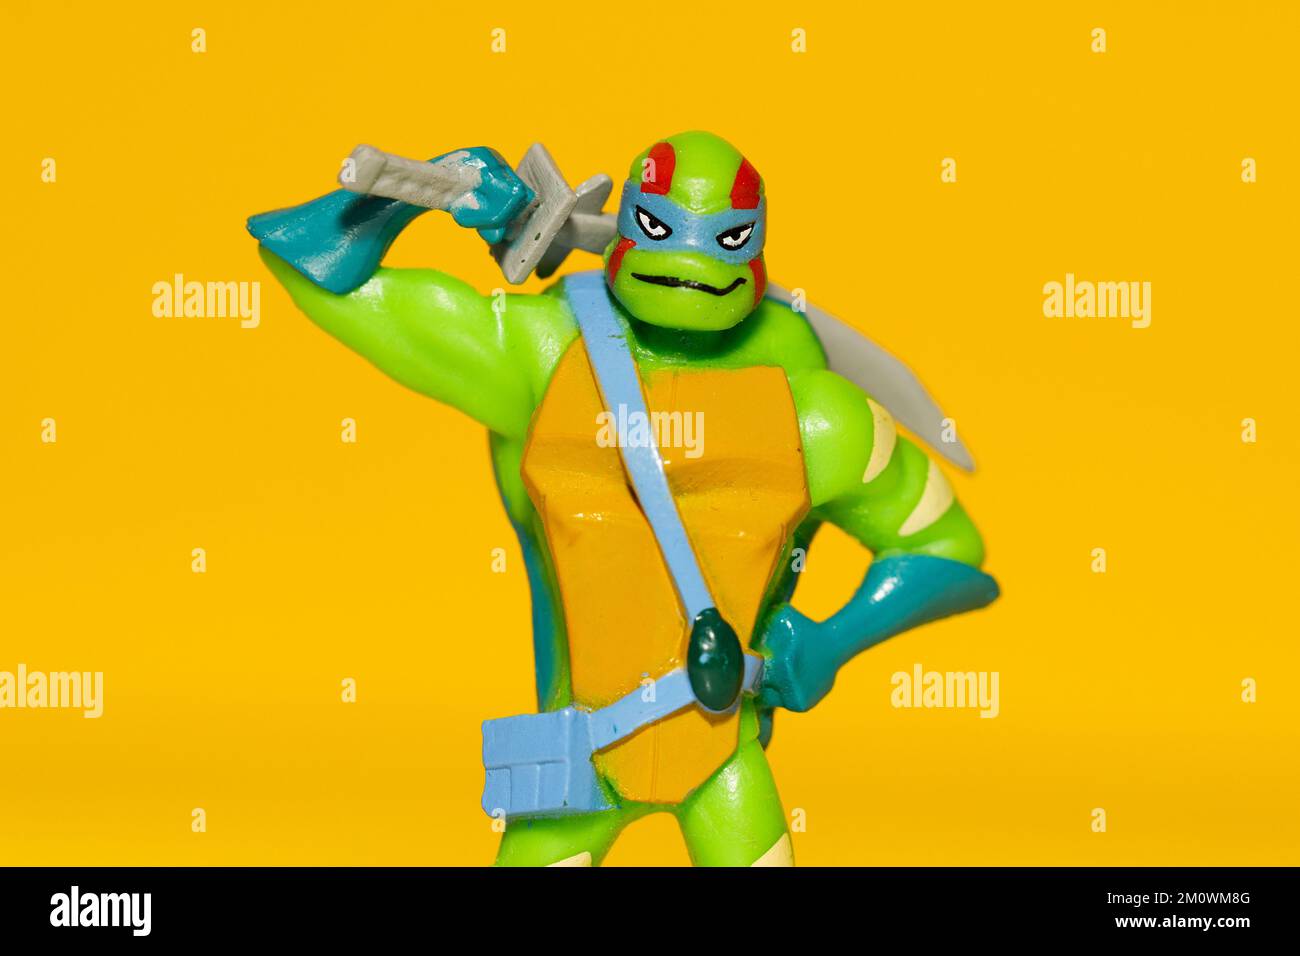 https://c8.alamy.com/comp/2M0WM8G/russia-vyborg-08082022-toy-ninja-turtle-raphael-with-a-sword-on-a-yellow-background-high-quality-photo-2M0WM8G.jpg